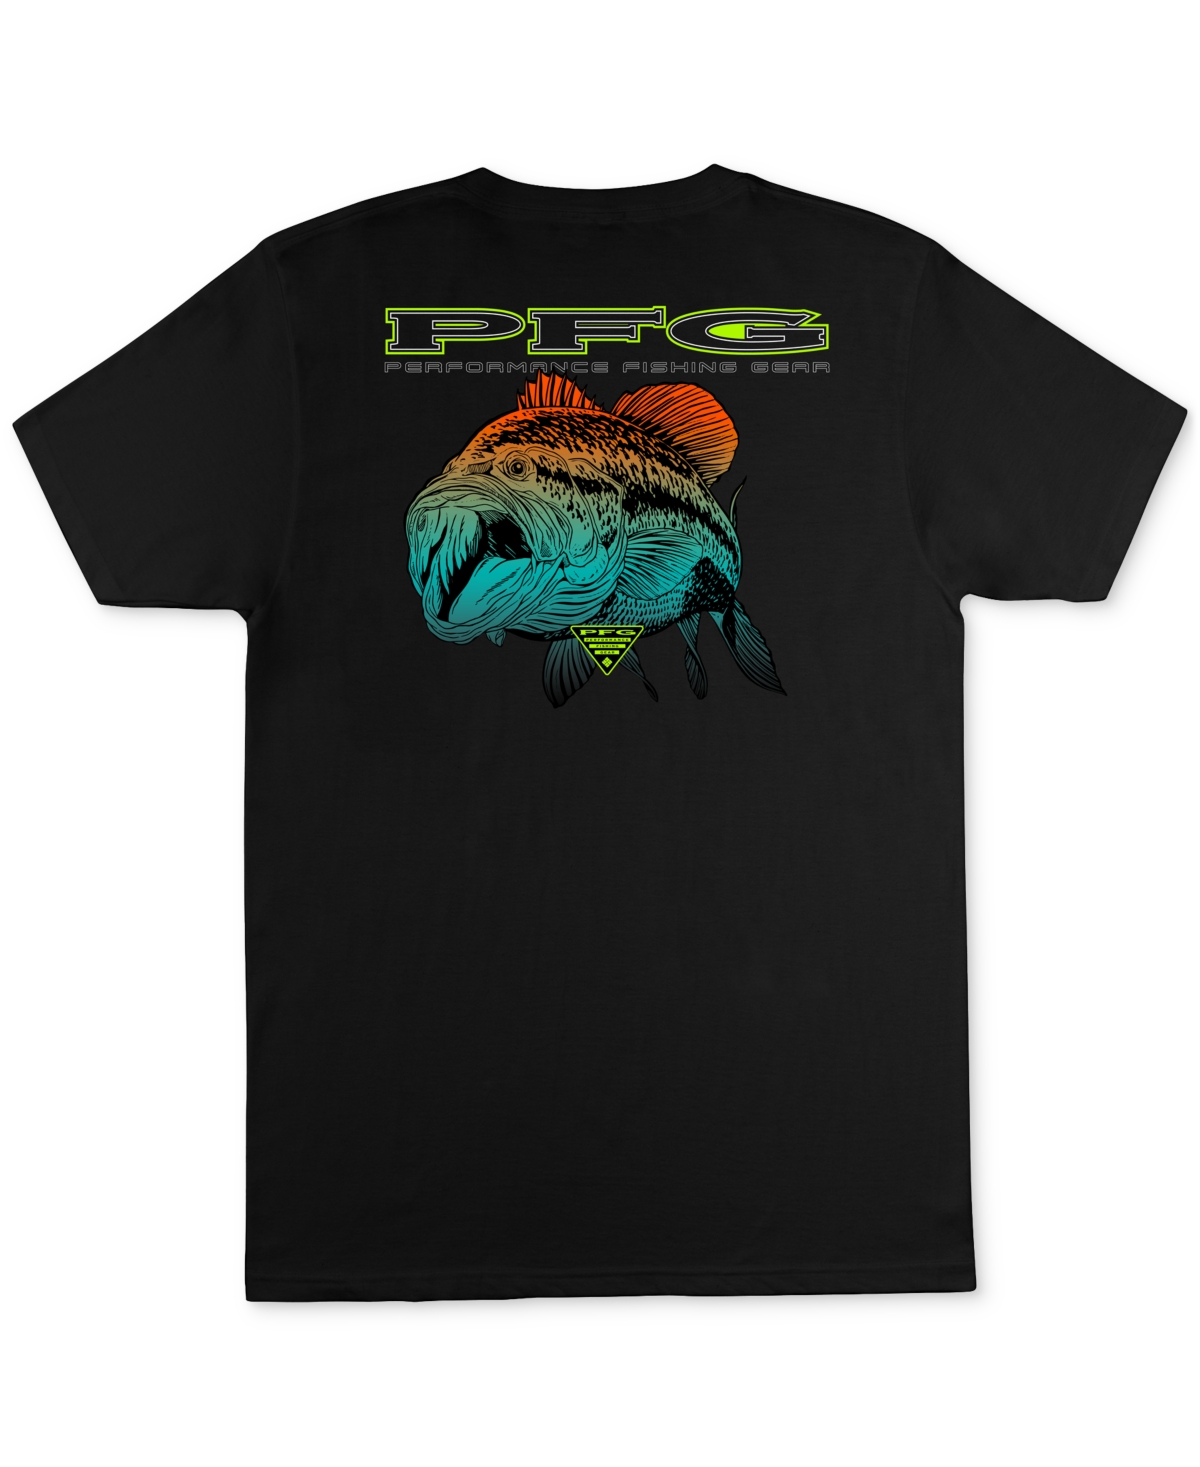 Men's Bristo Pfg Bass Graphic T-Shirt - Black